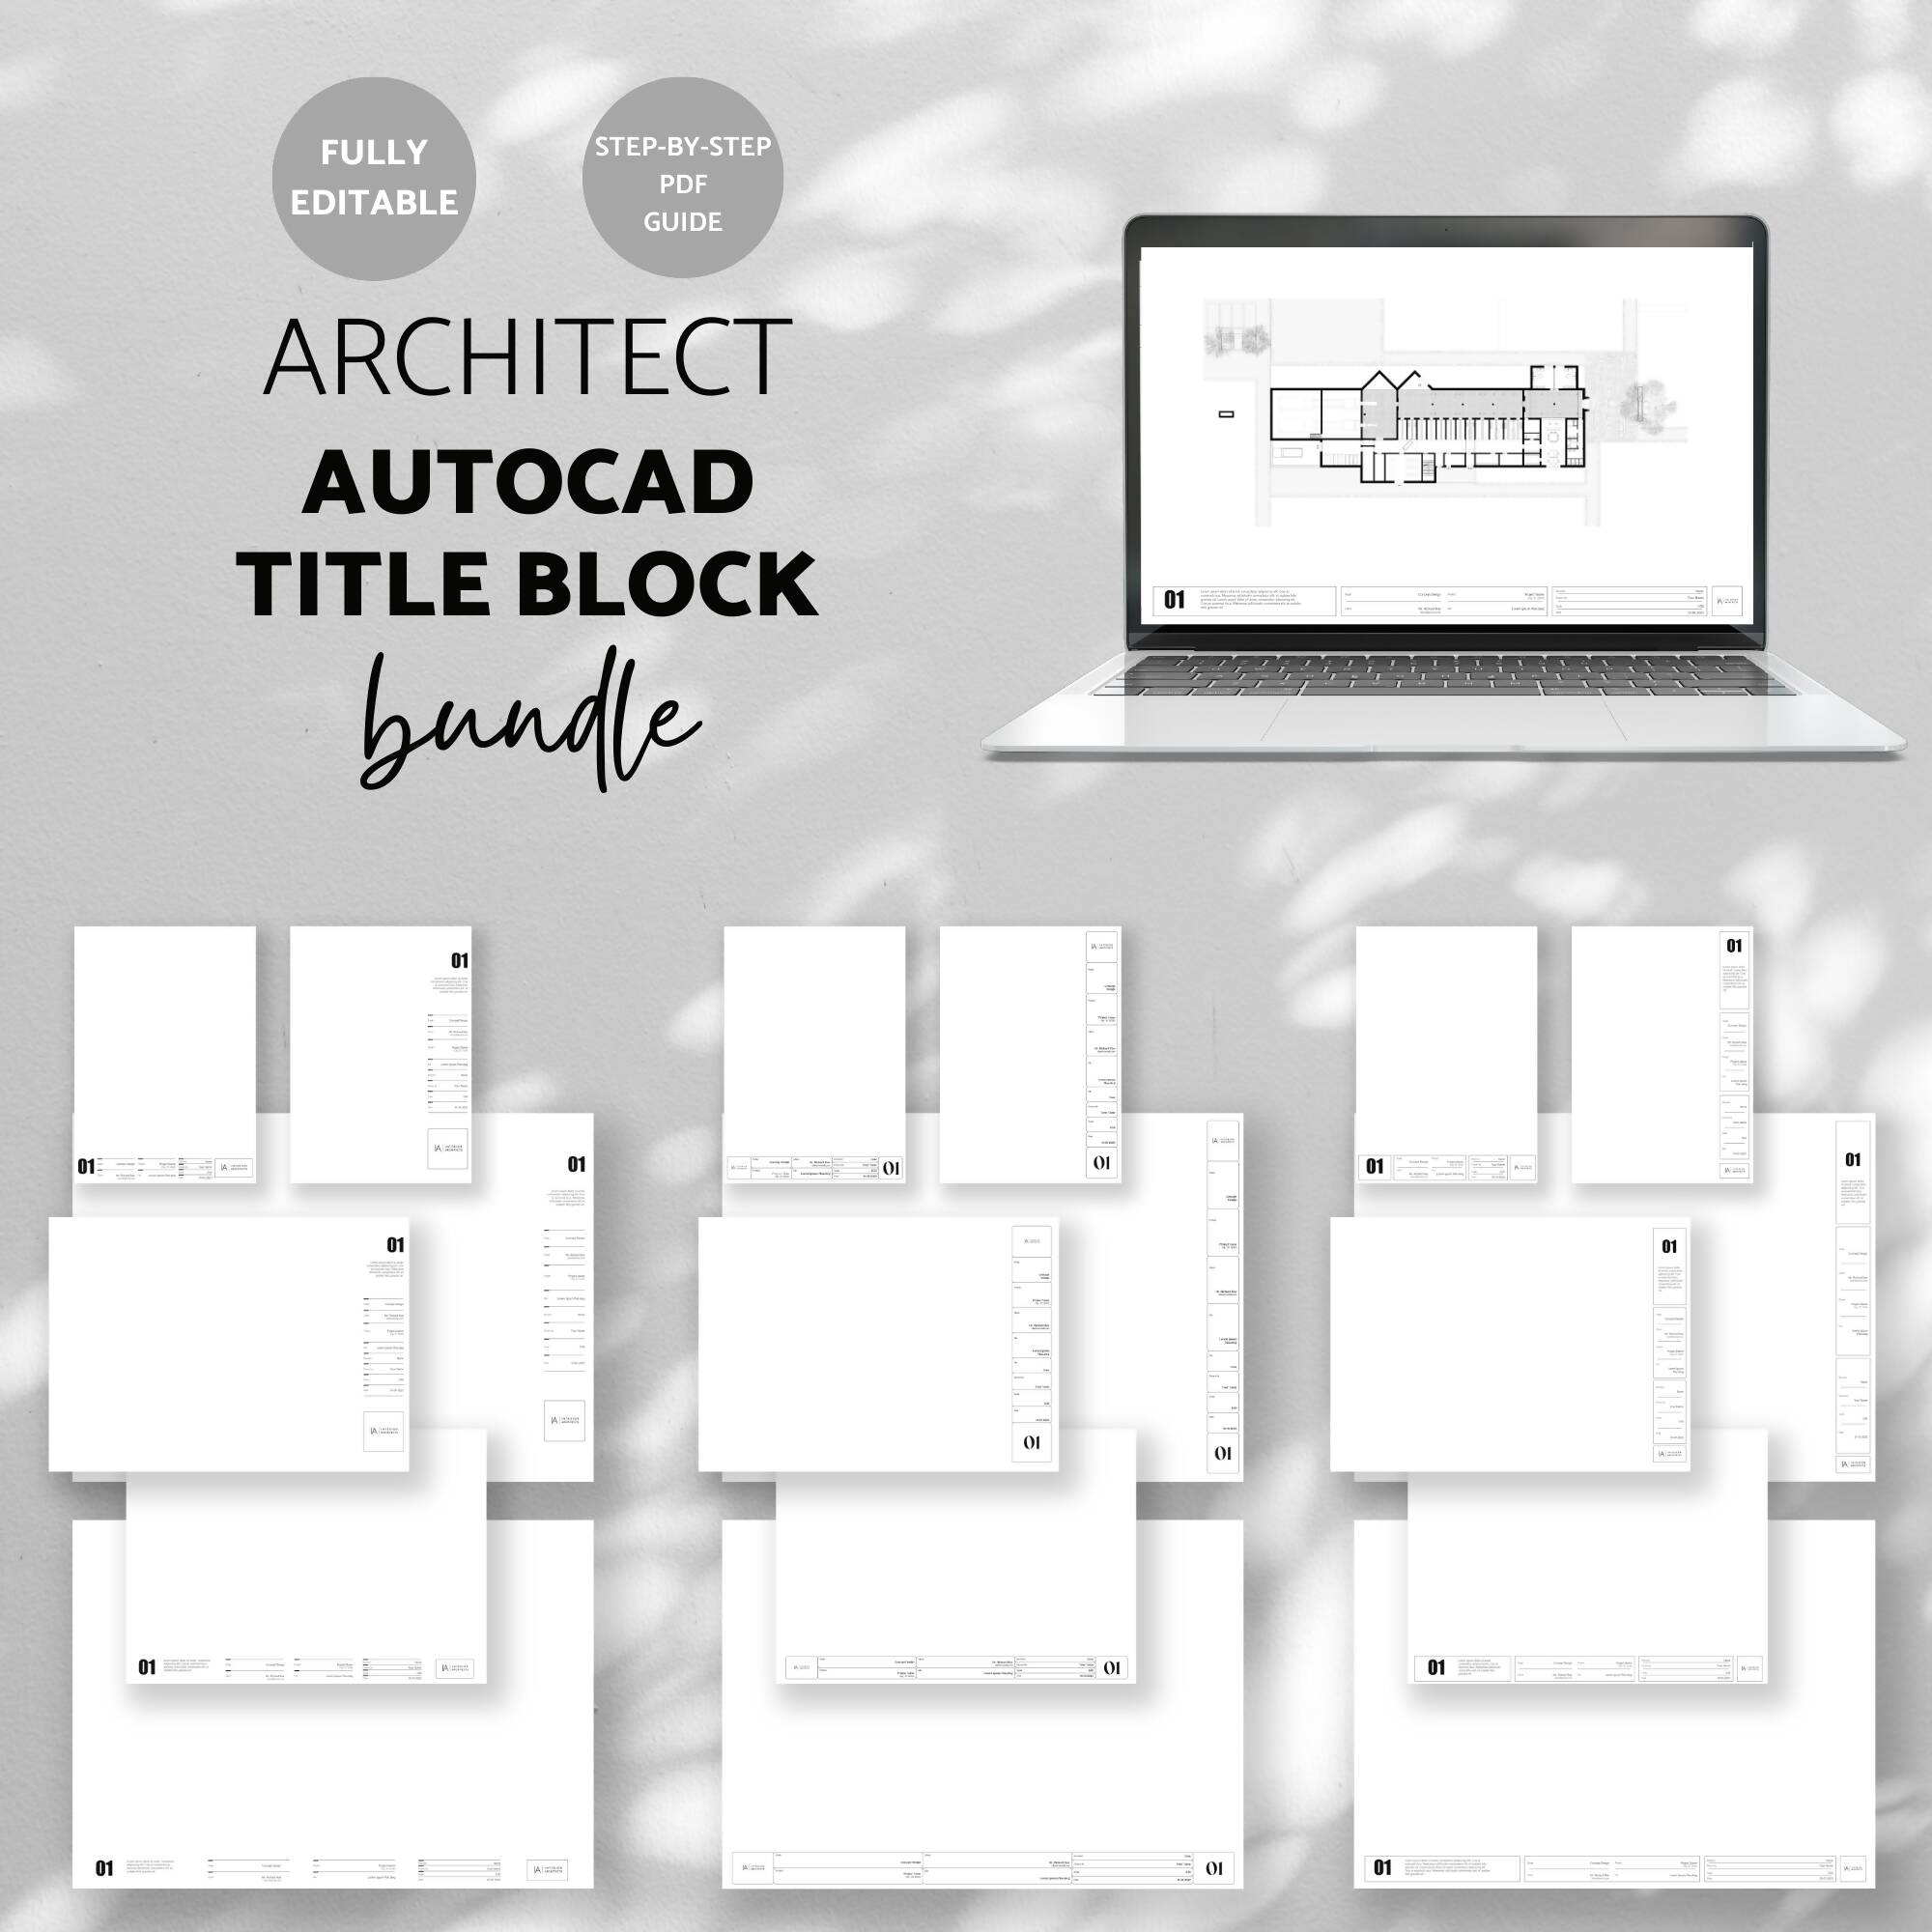 Autocad Title Block Templates Bundle I-III PNG - Toffu Co